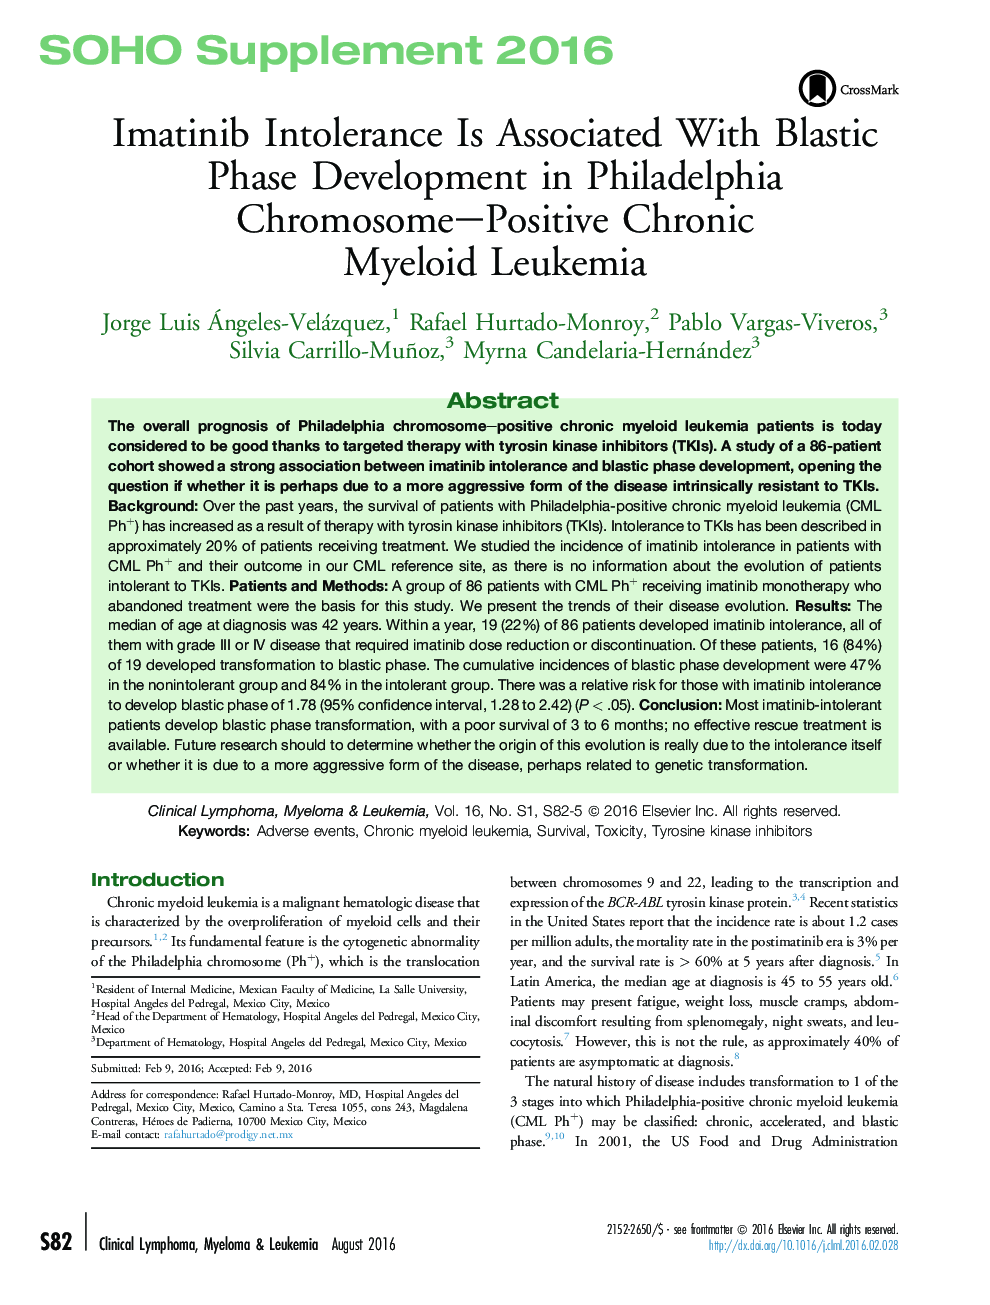 Imatinib Intolerance Is Associated With Blastic Phase Development in Philadelphia Chromosome–Positive Chronic Myeloid Leukemia